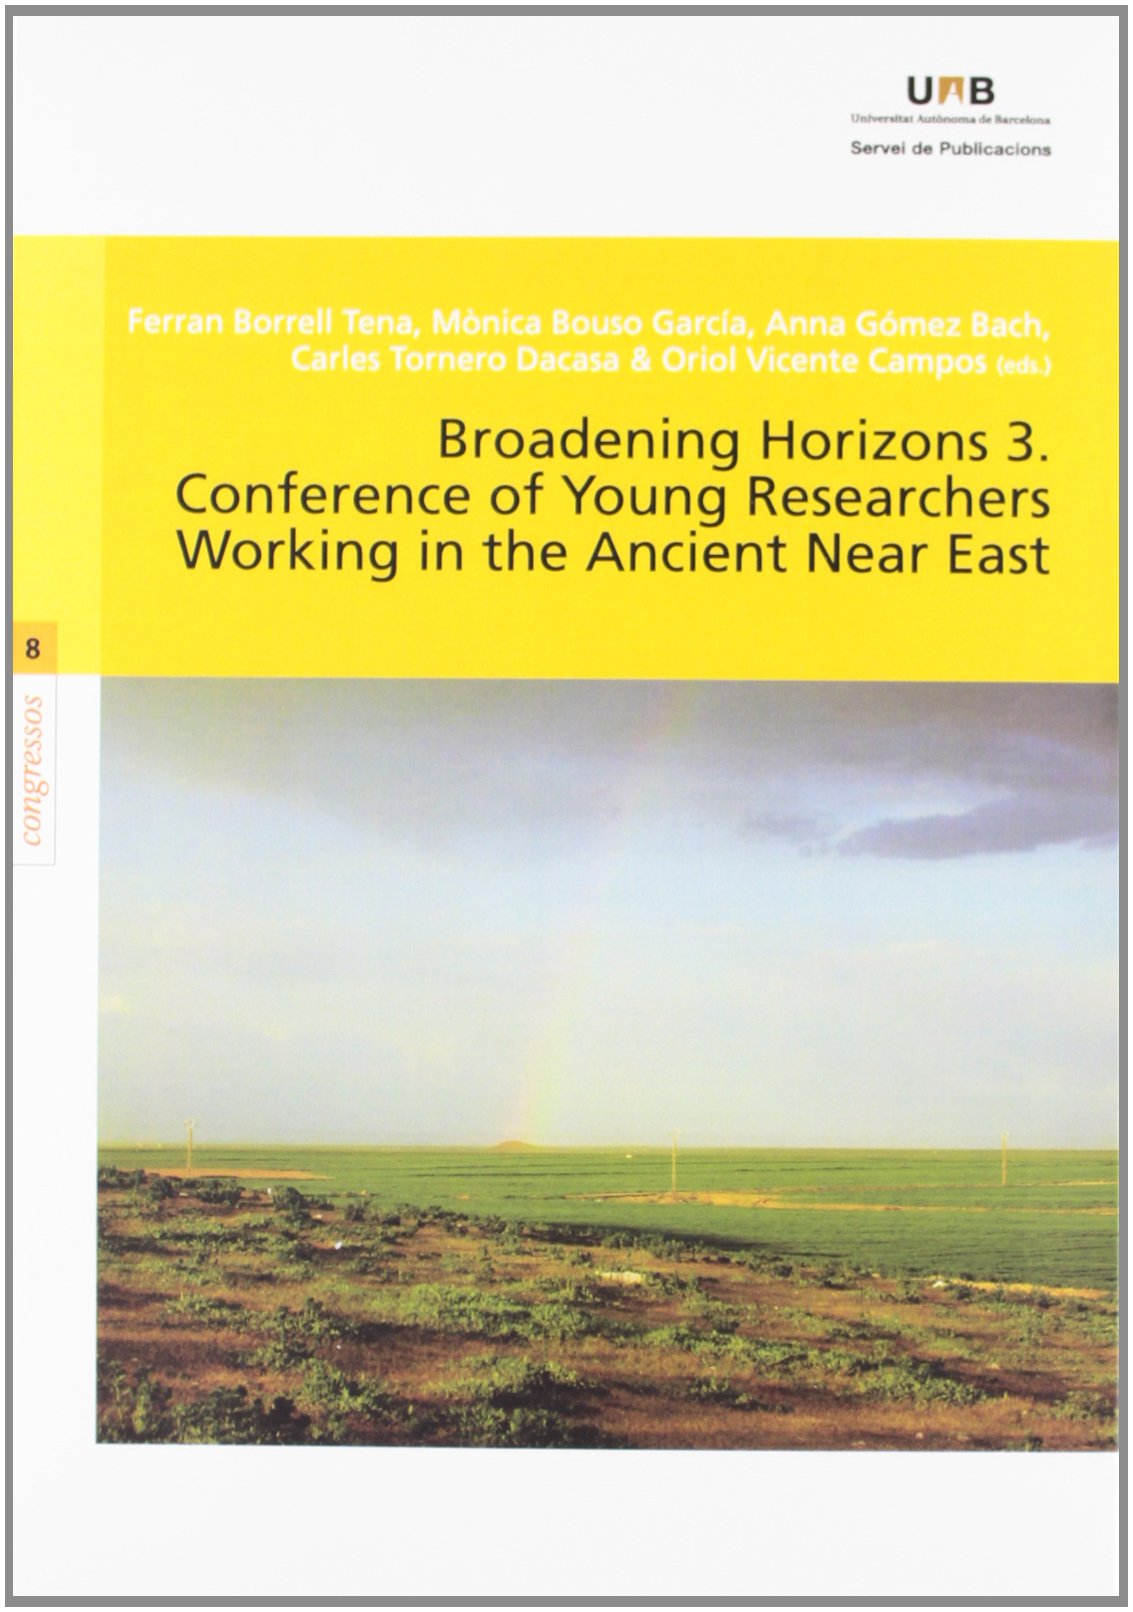 Imagen de portada del libro Broadening Horizons 3